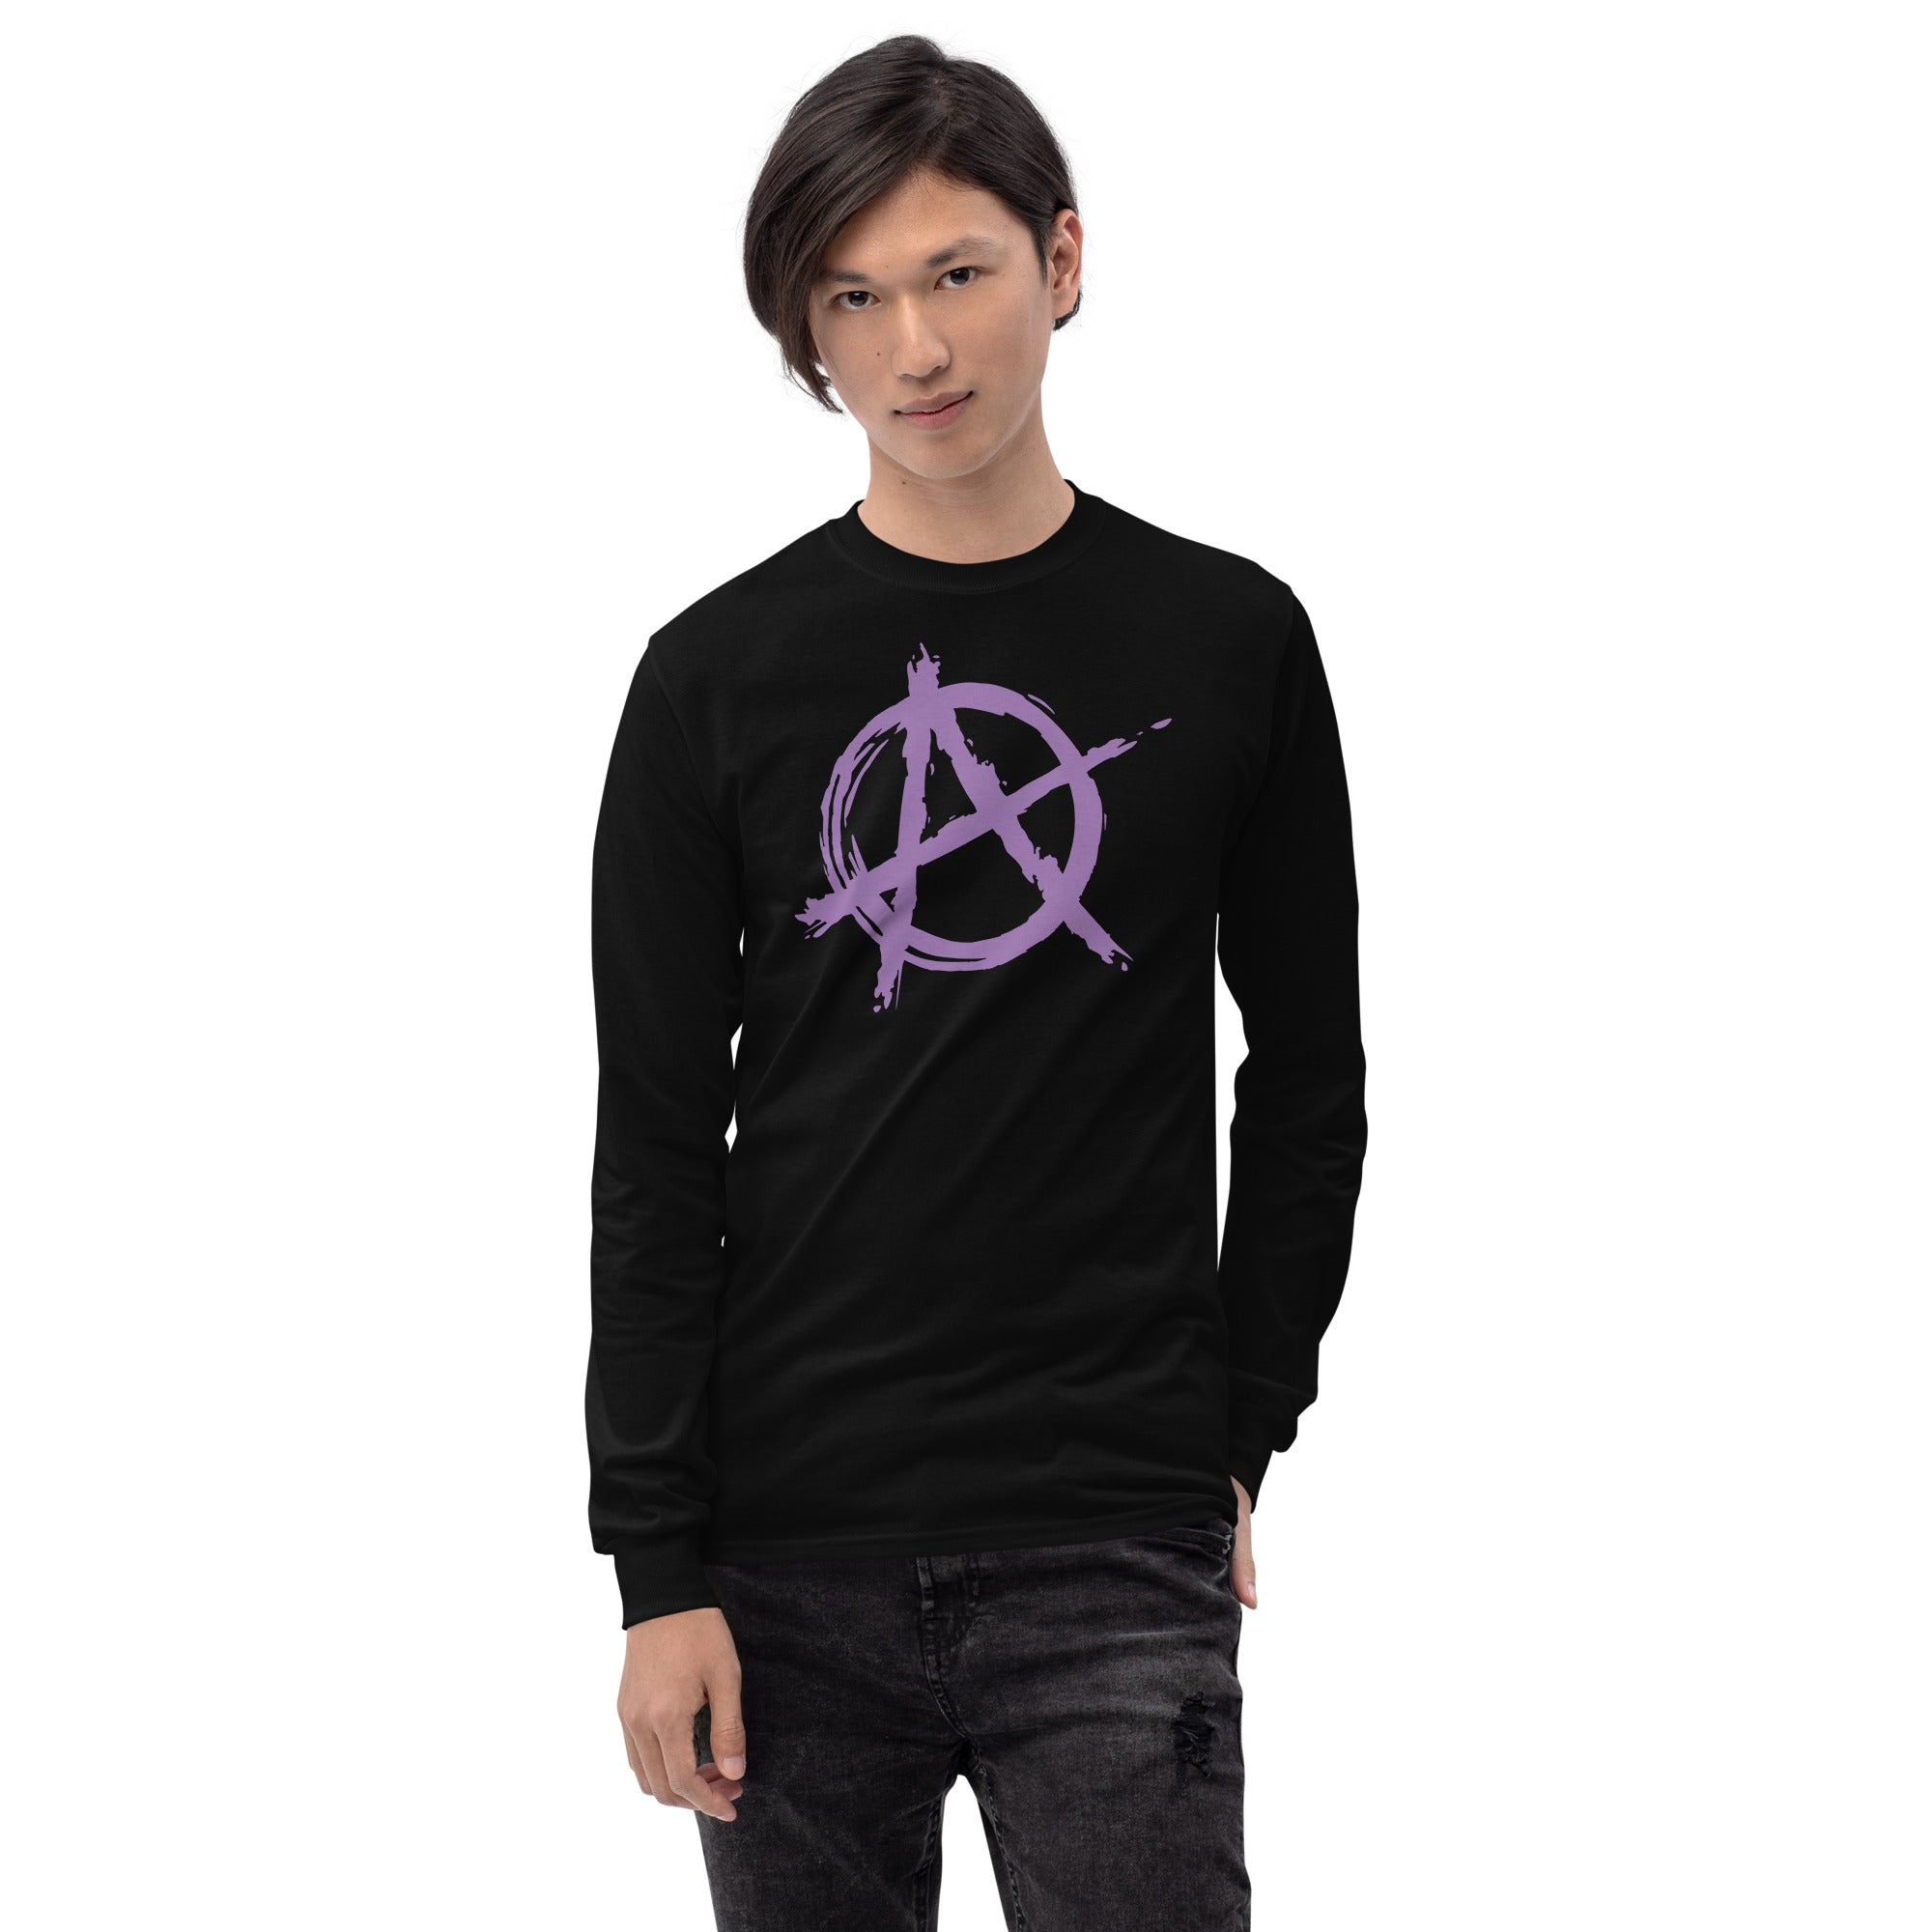 Purple Anarchy is Order Symbol Punk Rock Long Sleeve Shirt - Edge of Life Designs